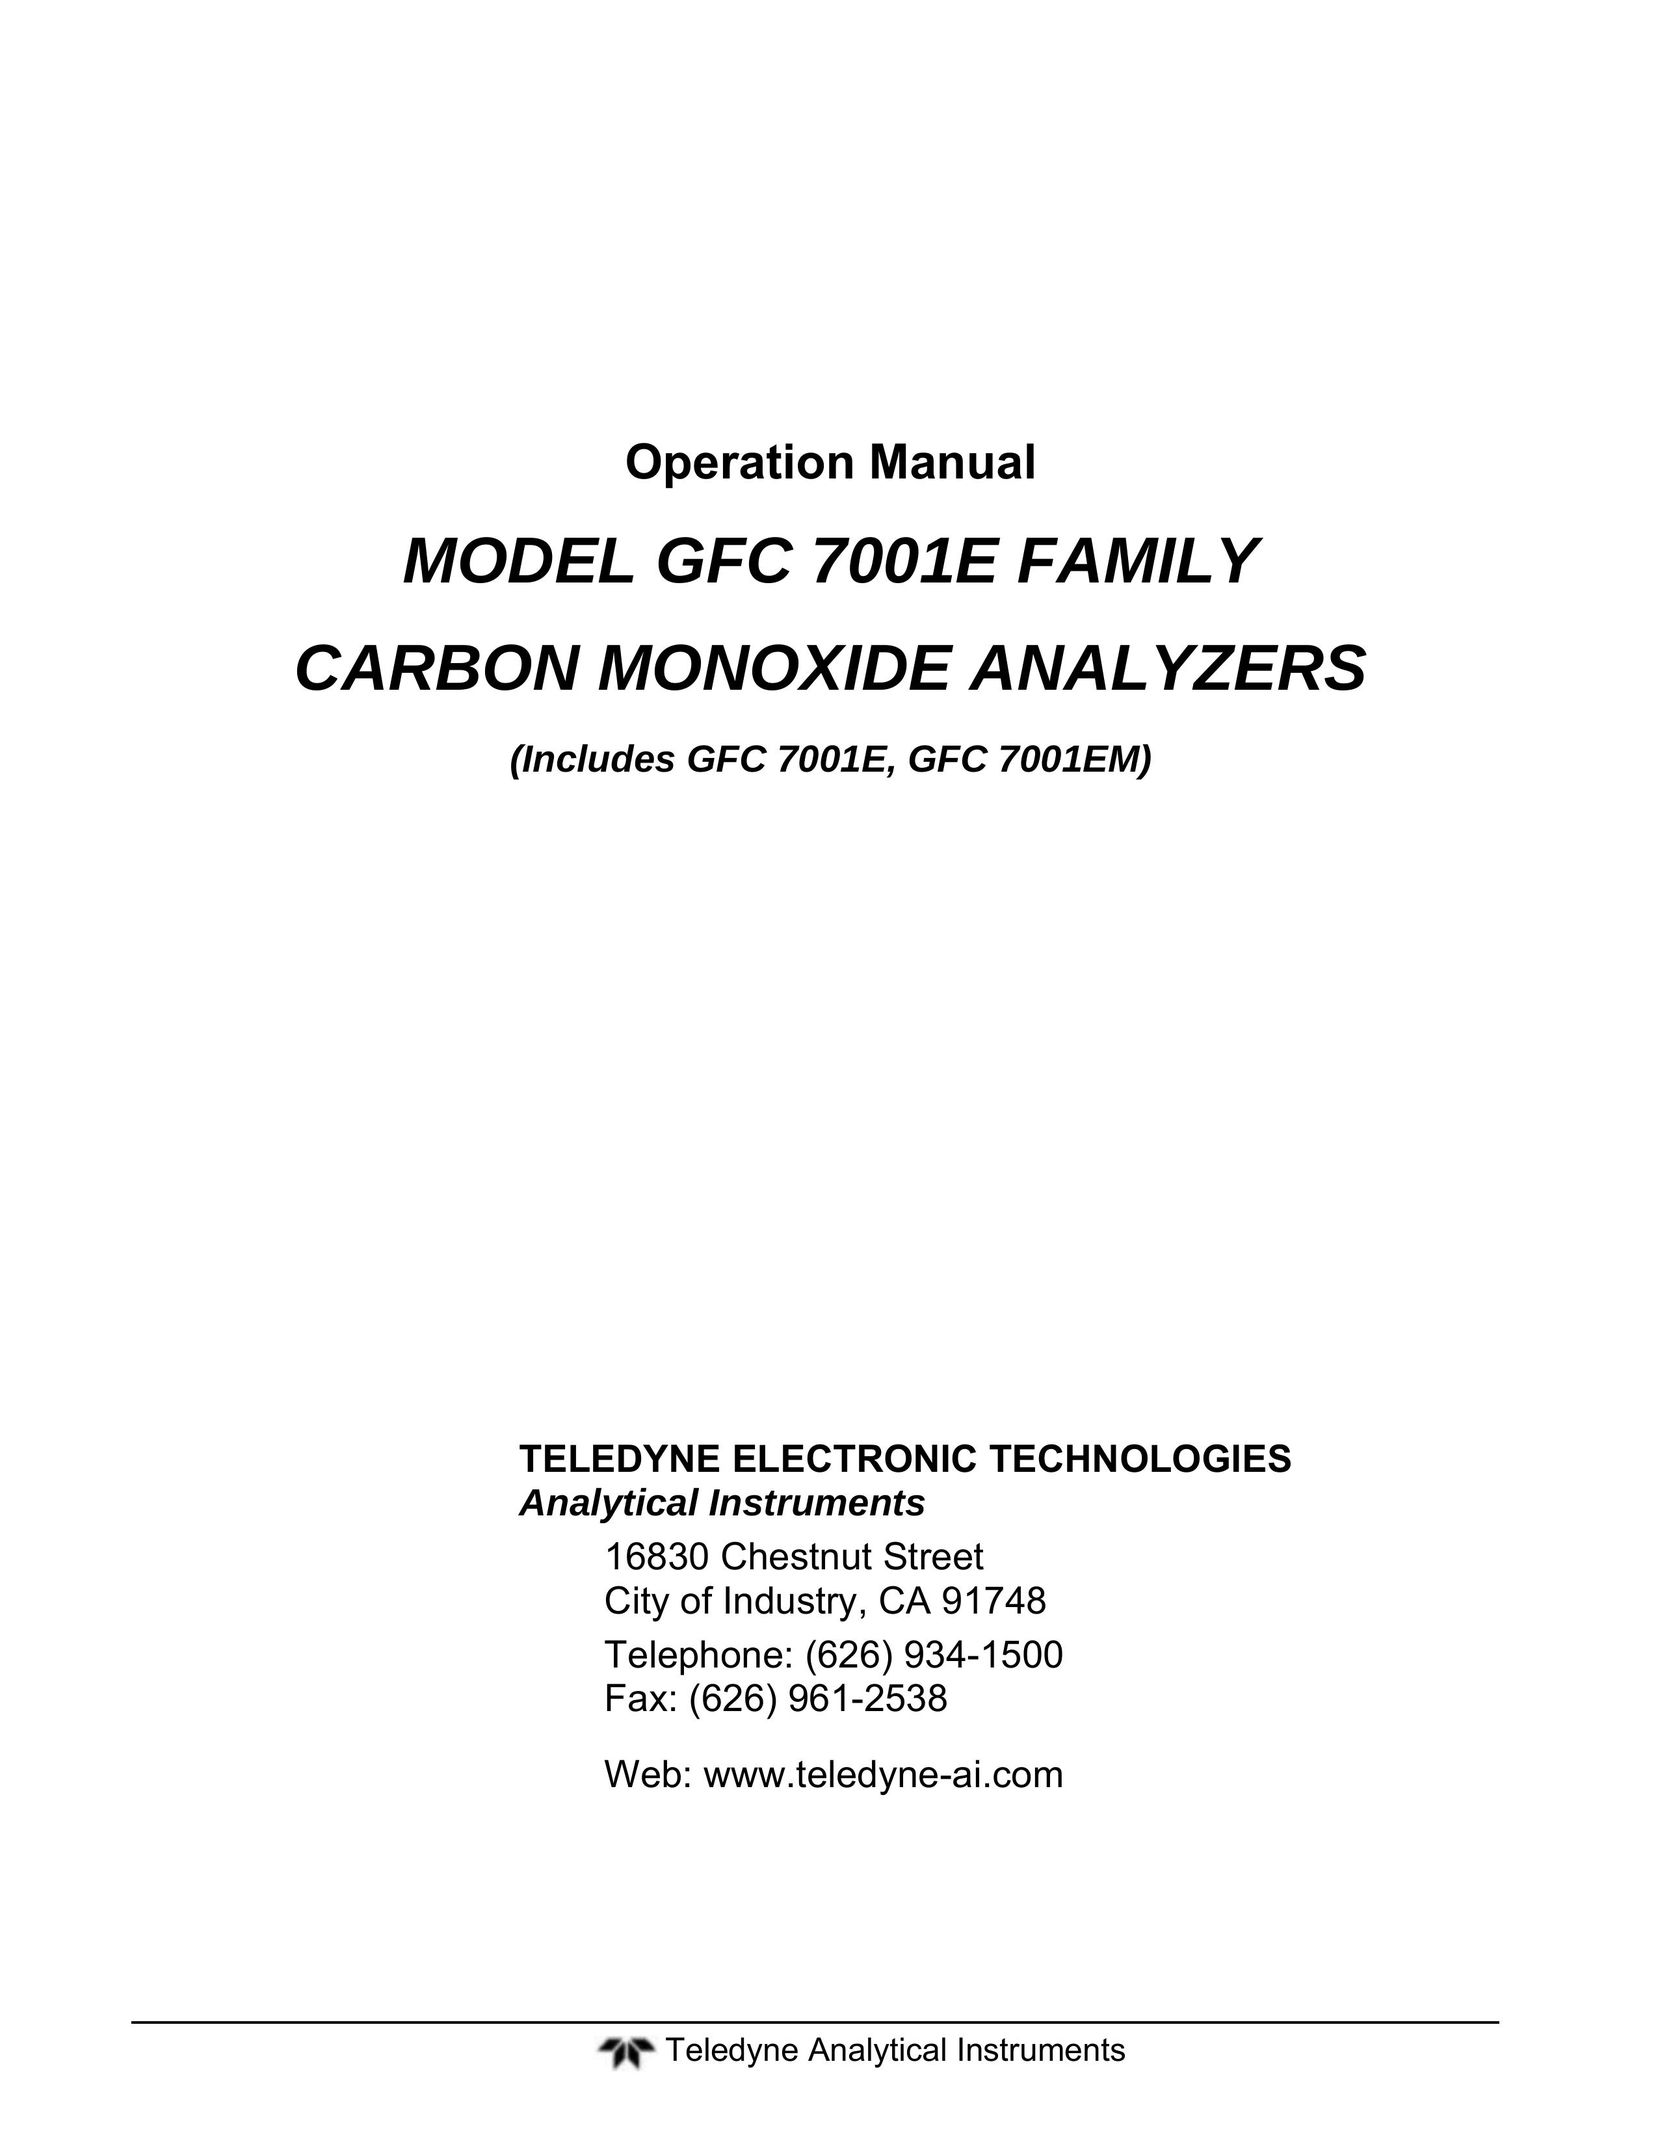 Teledyne GFC 7001EM Carbon Monoxide Alarm User Manual